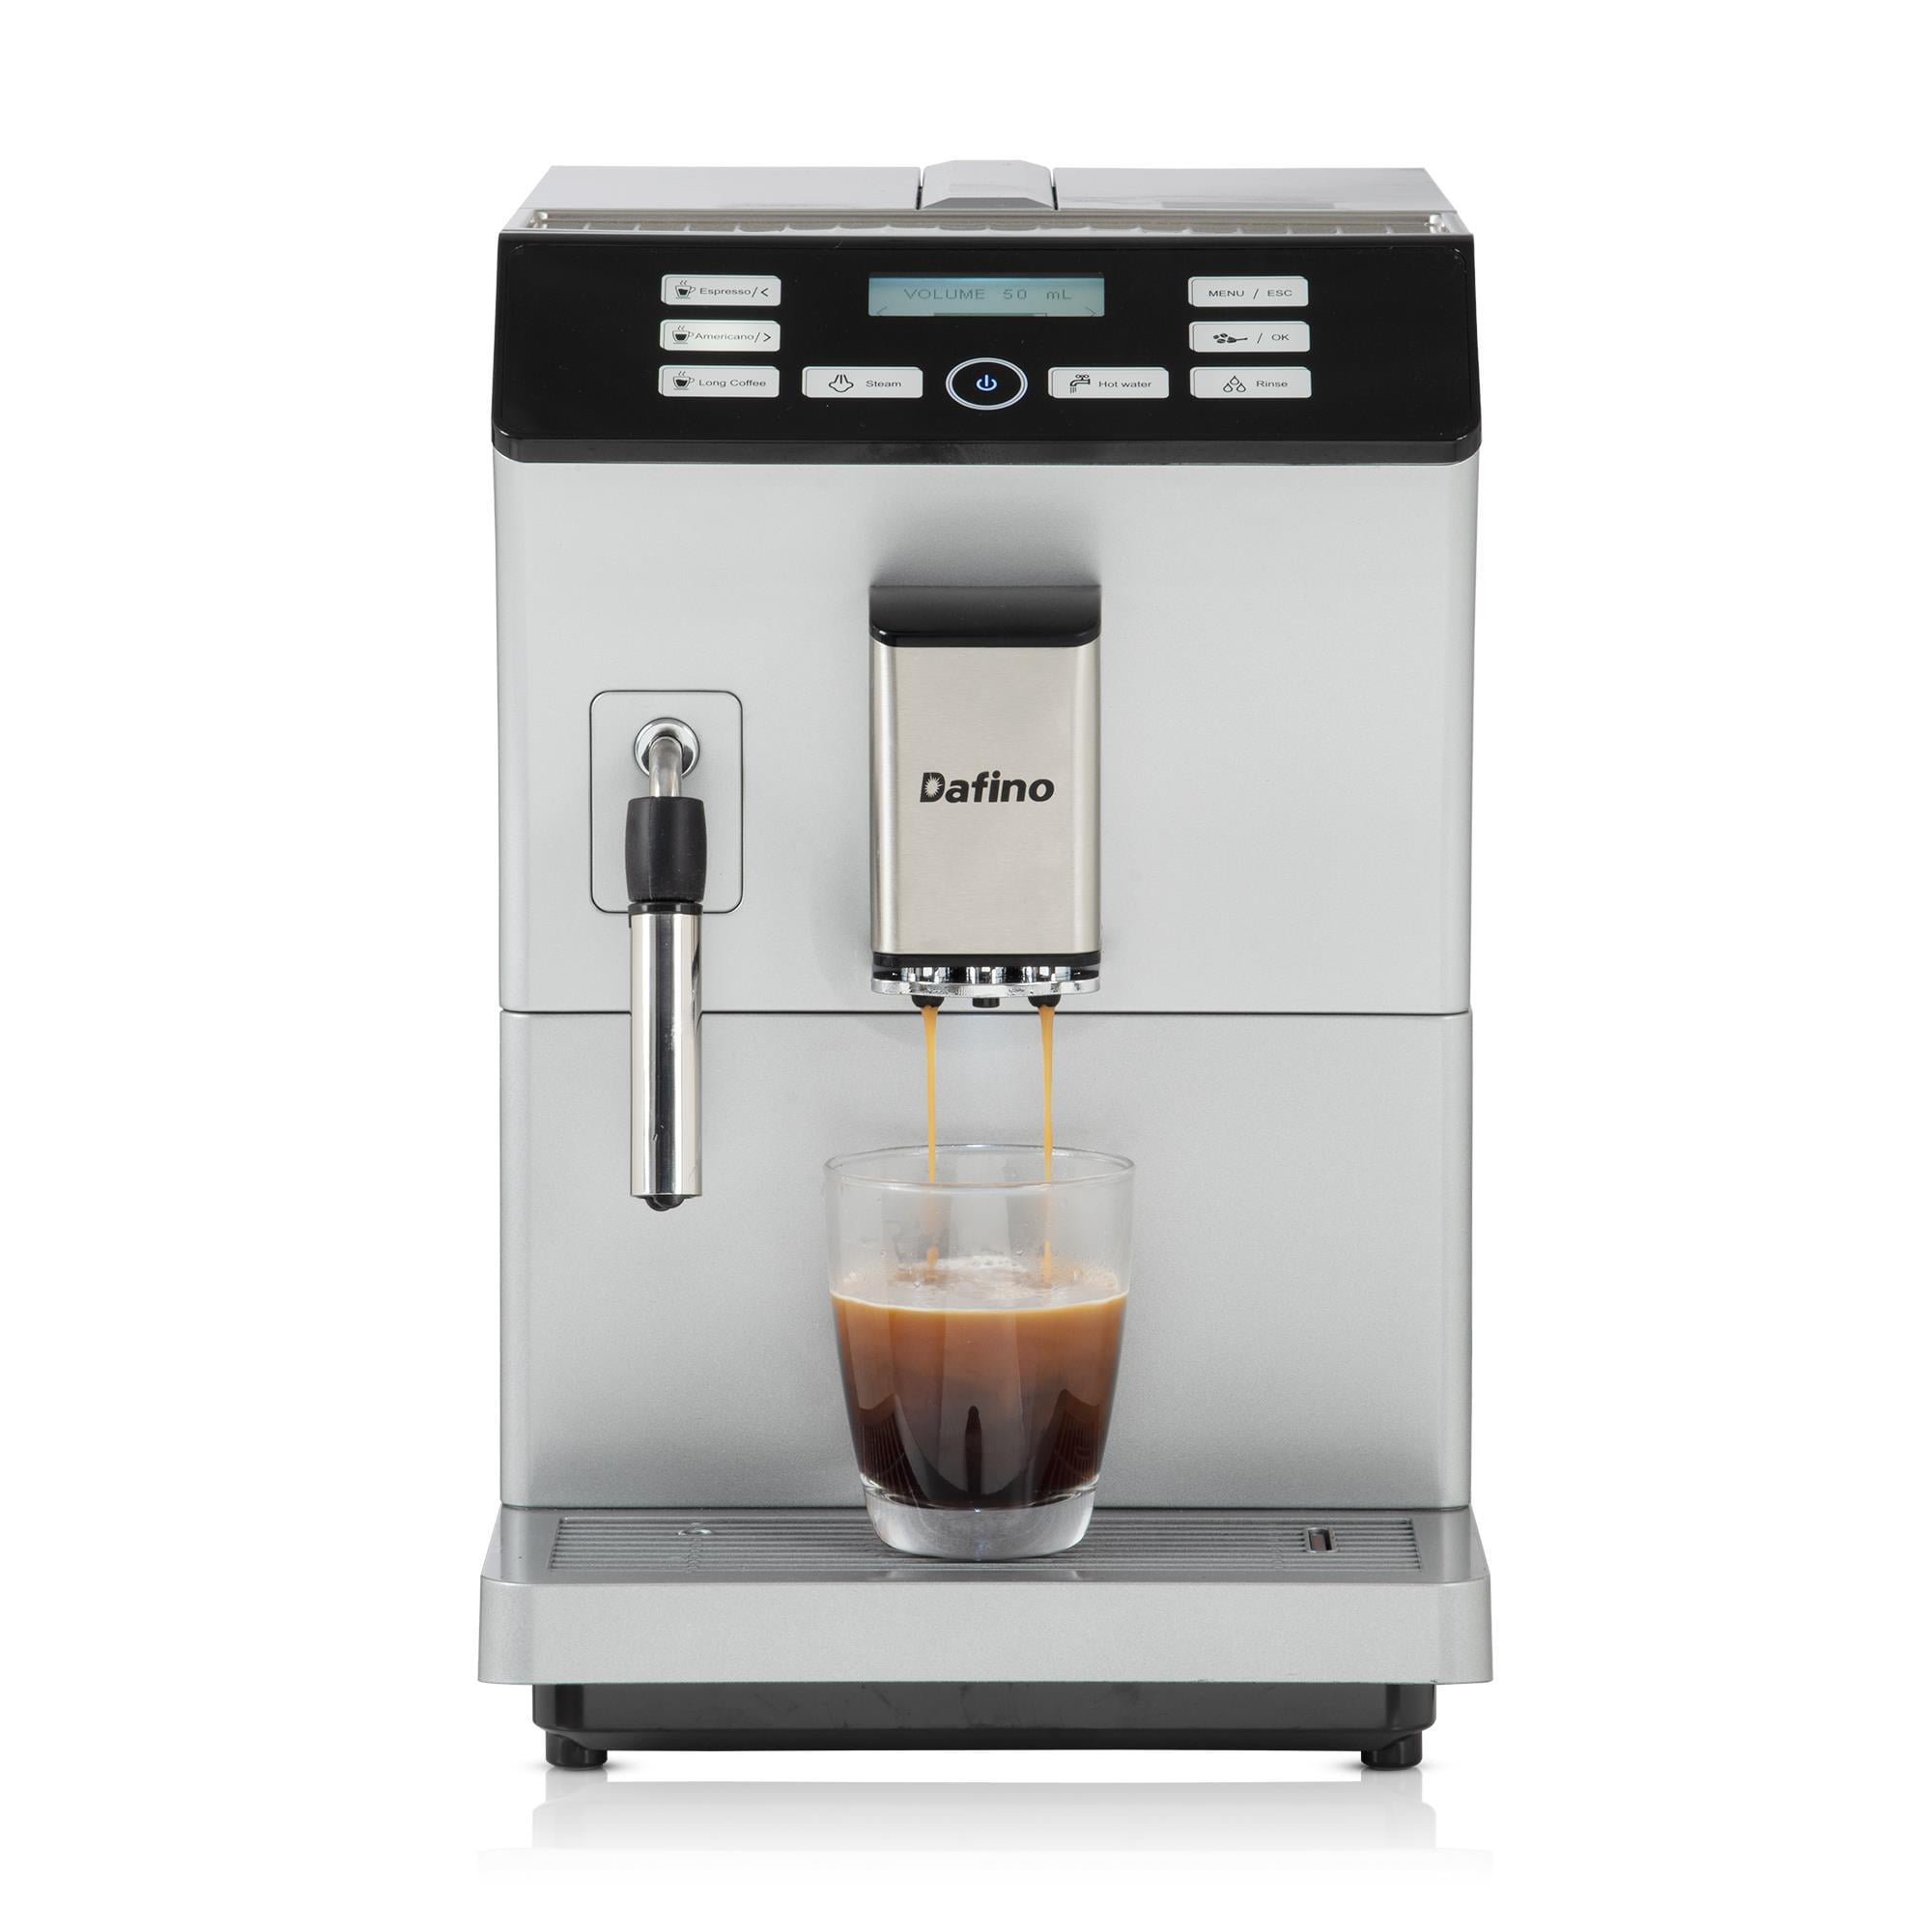 UbesGoo Espresso Machine,20 bar espresso machine with milk frother